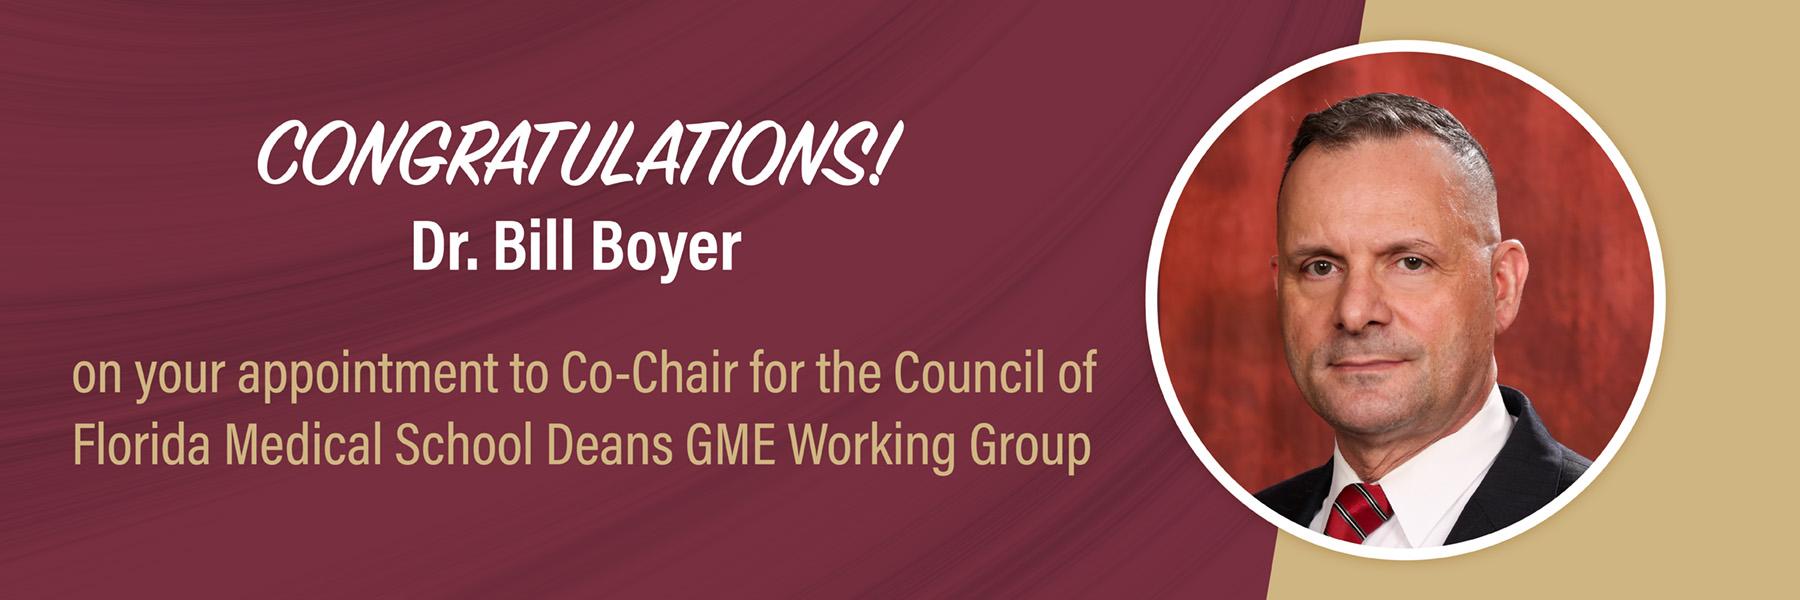 Congratulations Dr Boyer